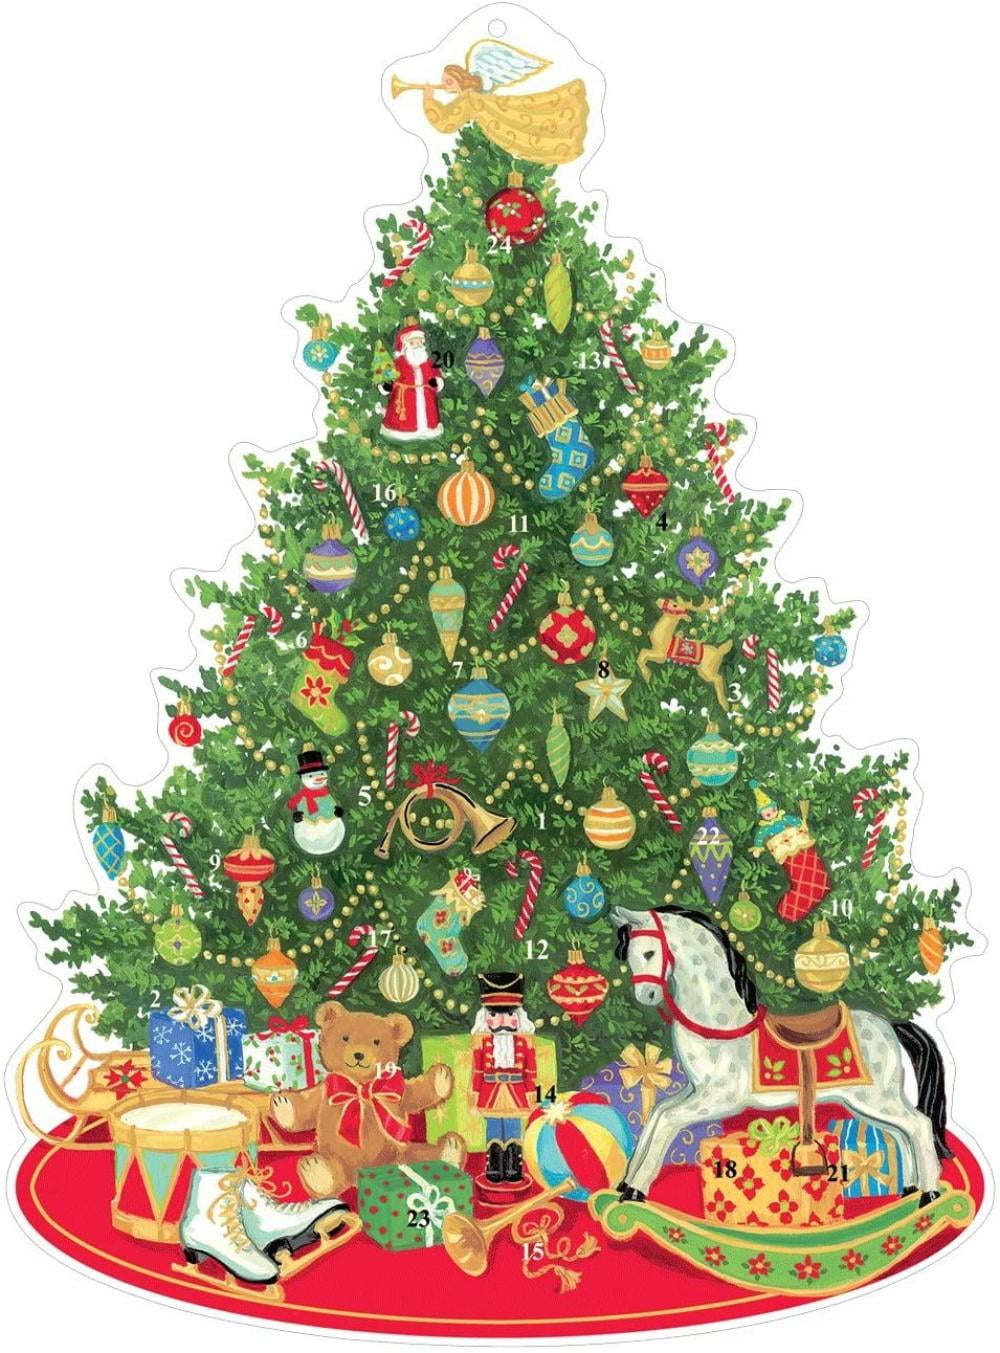 CASPARI 3 Dimensional Pop-Up Santa's Train Christmas Advent Calendar